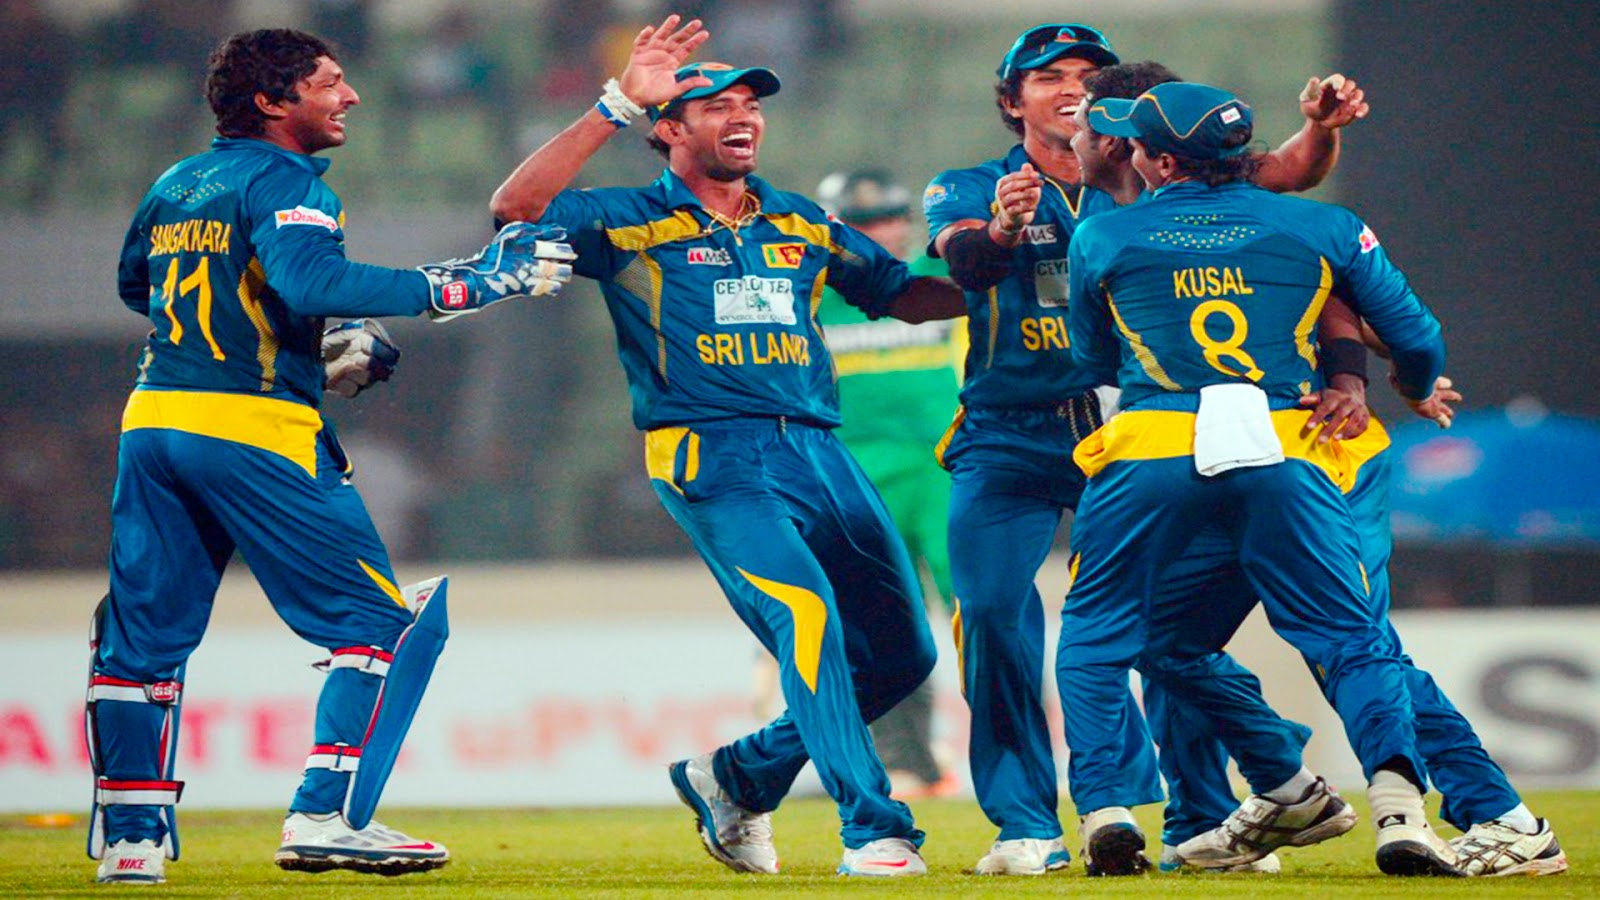 Sun Idiotbox: Sri Lanka vs Bangladesh, ICC Cricket World Cup 20151600 x 900